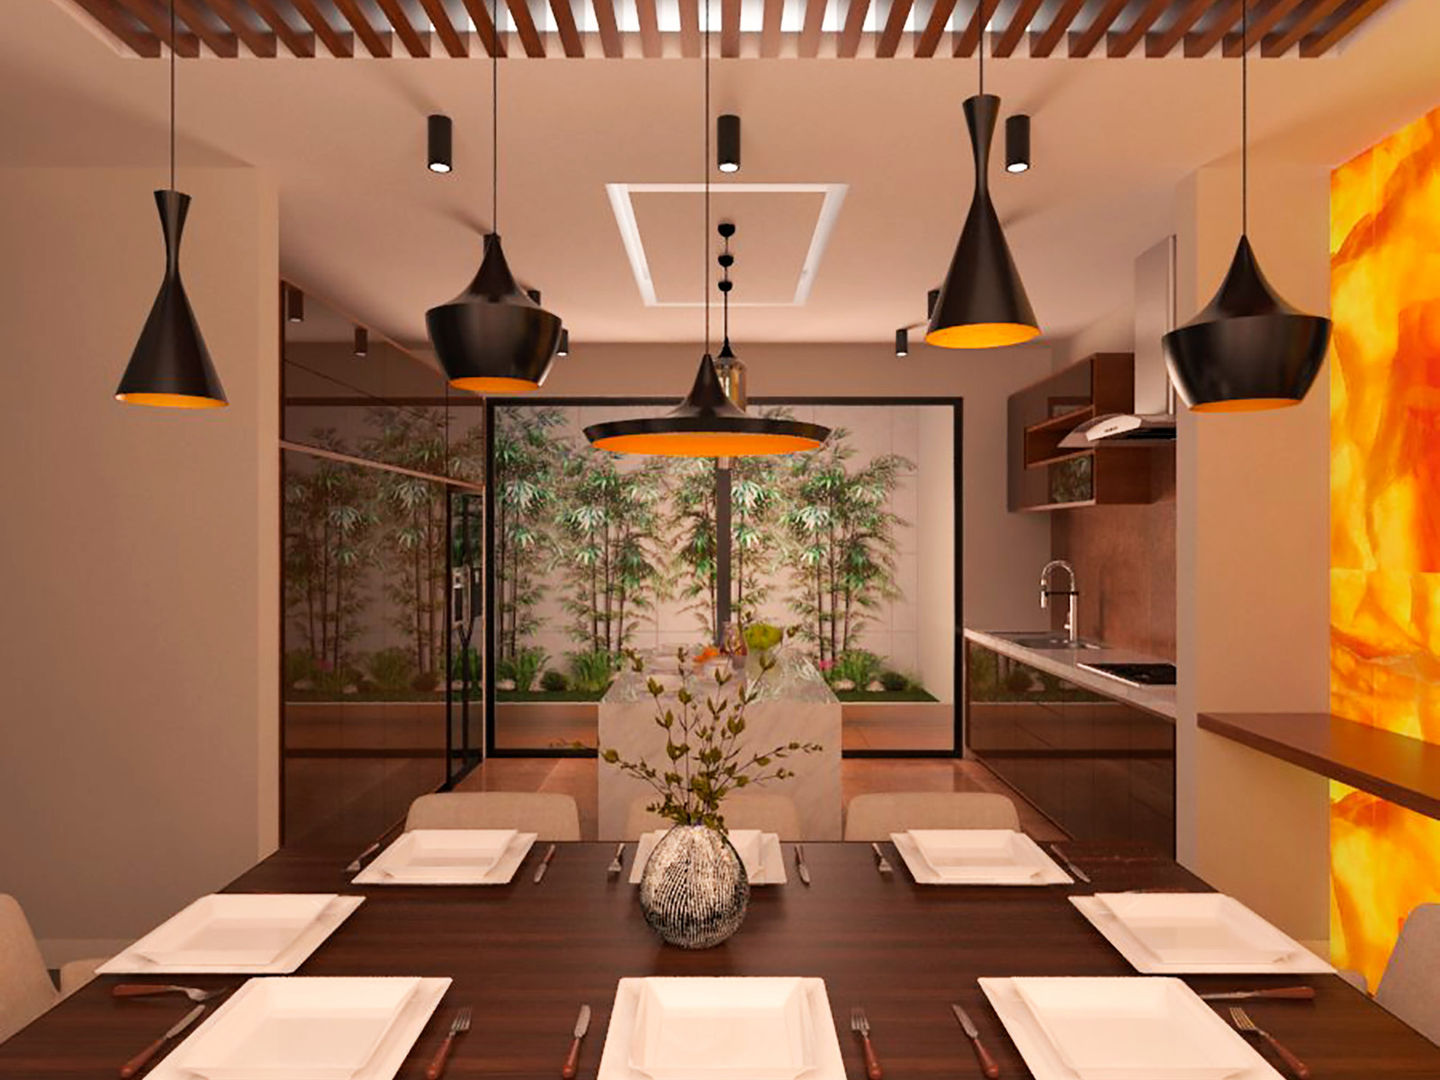 EB 54 Casa Habitación , Proyecto 3Catorce Proyecto 3Catorce Modern dining room